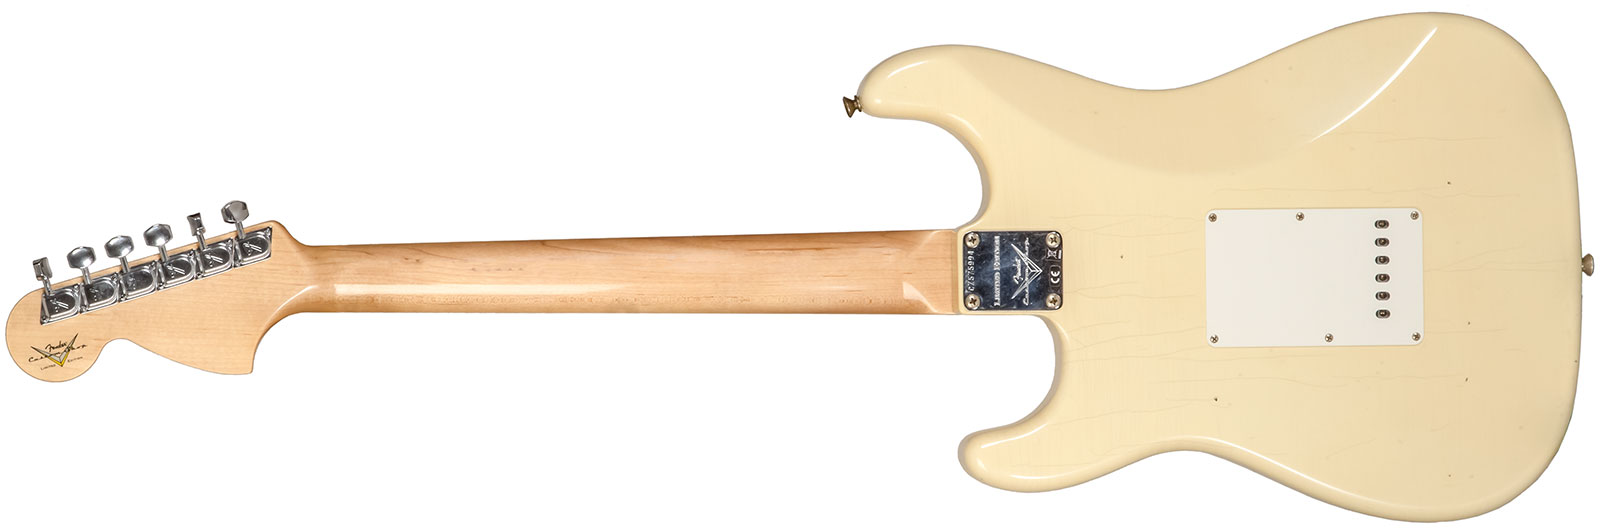 Fender Custom Shop Strat 1969 3s Trem Mn #cz576216 - Journeyman Relic Aged Vintage White - Guitarra eléctrica con forma de str. - Variation 1